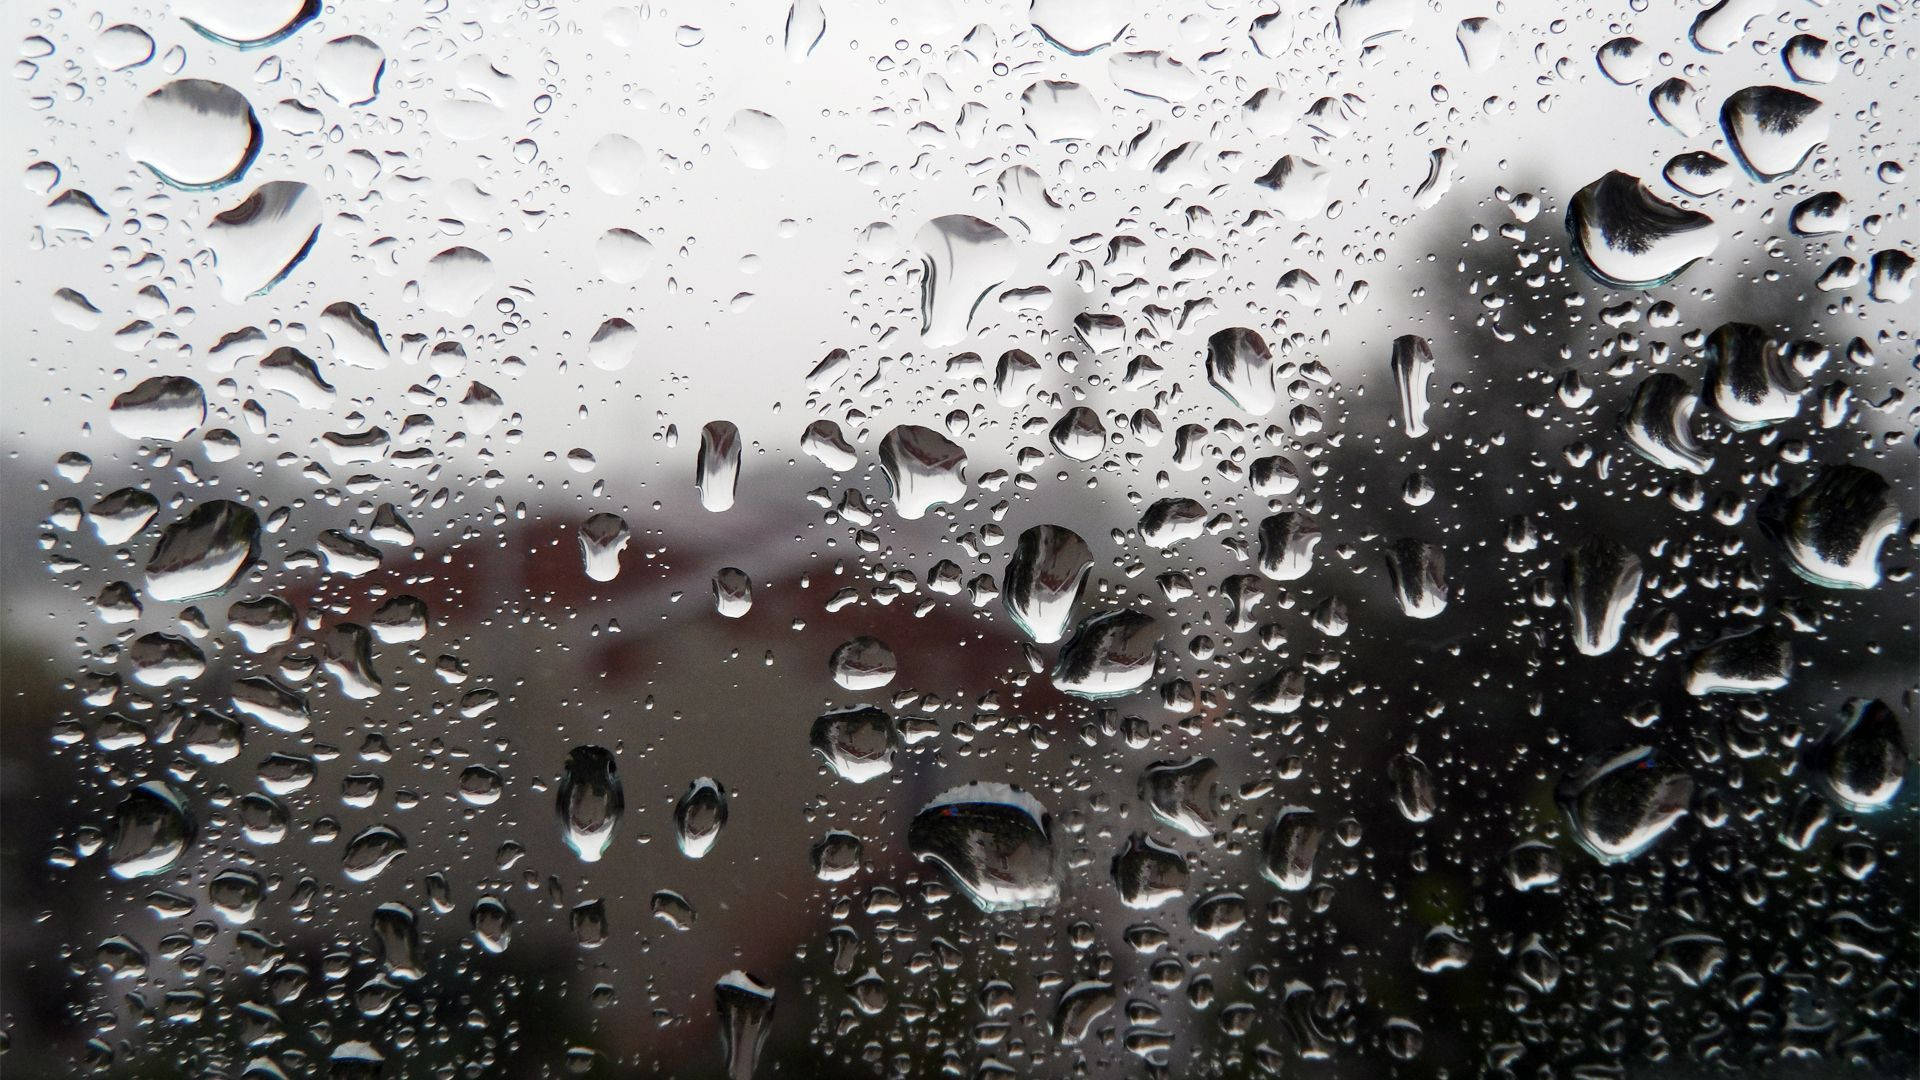 Falling Raindrops On Transparent Glass Pane